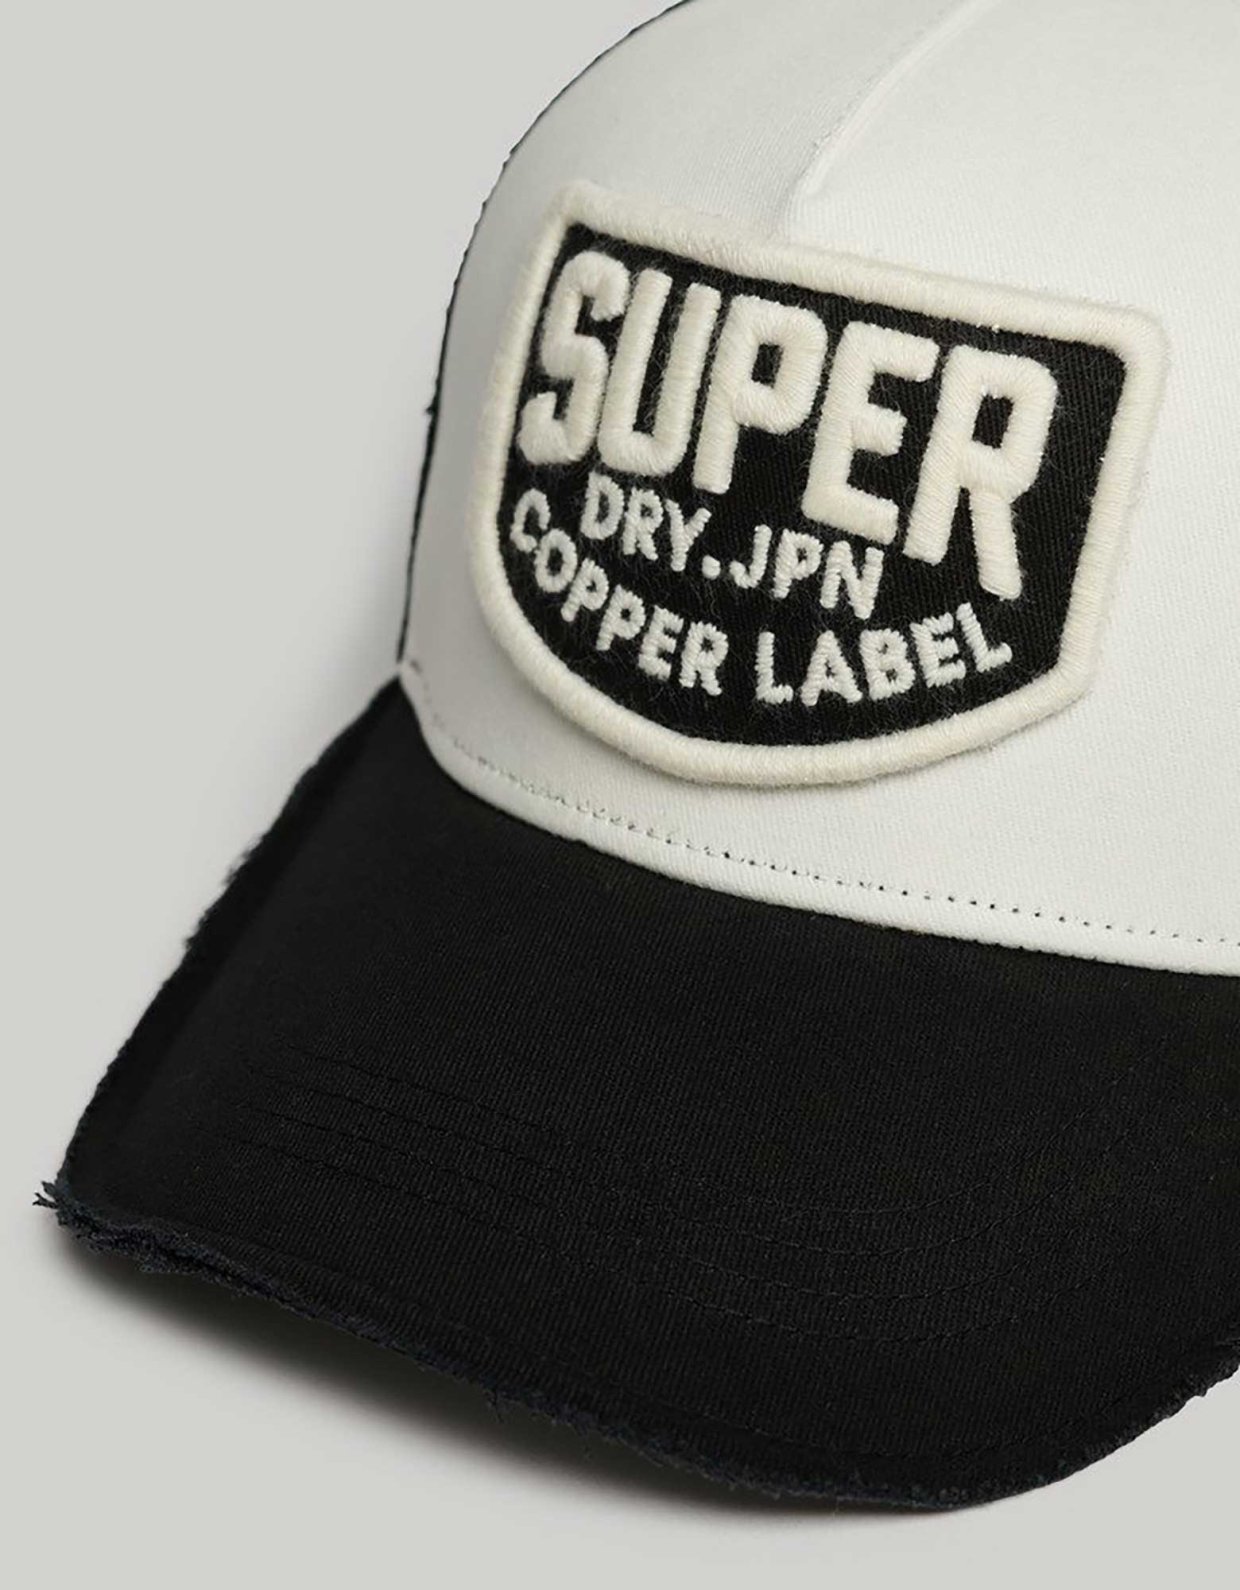 Superdry Mesh trucker cap black